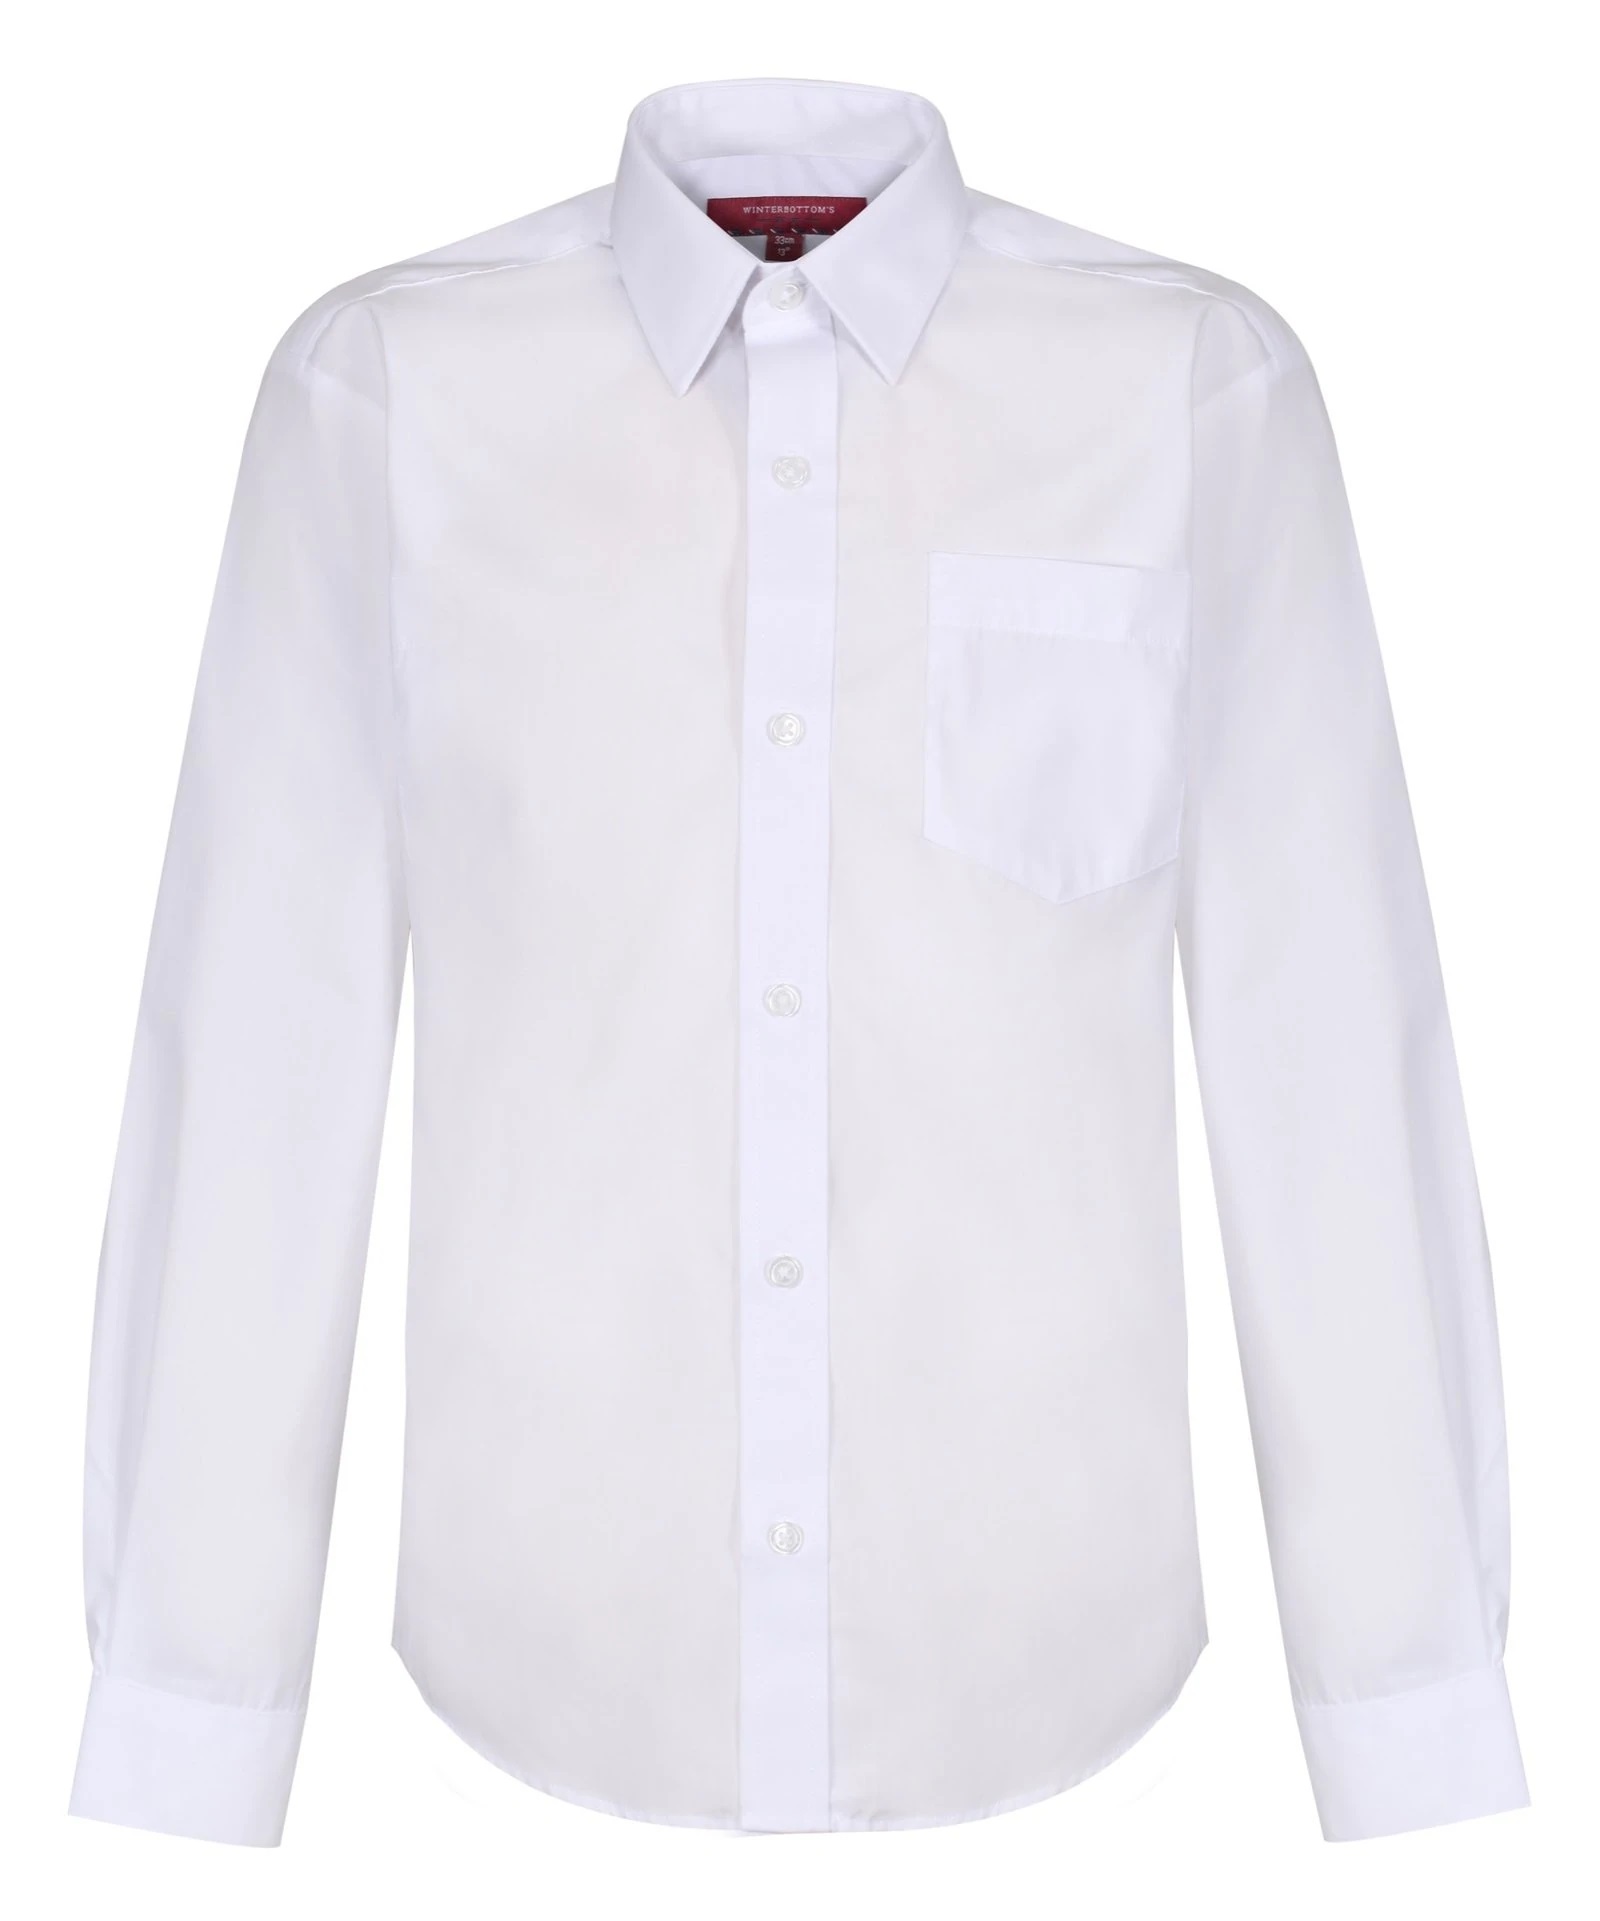 White School Shirt Long Sleeve - Twin Pack